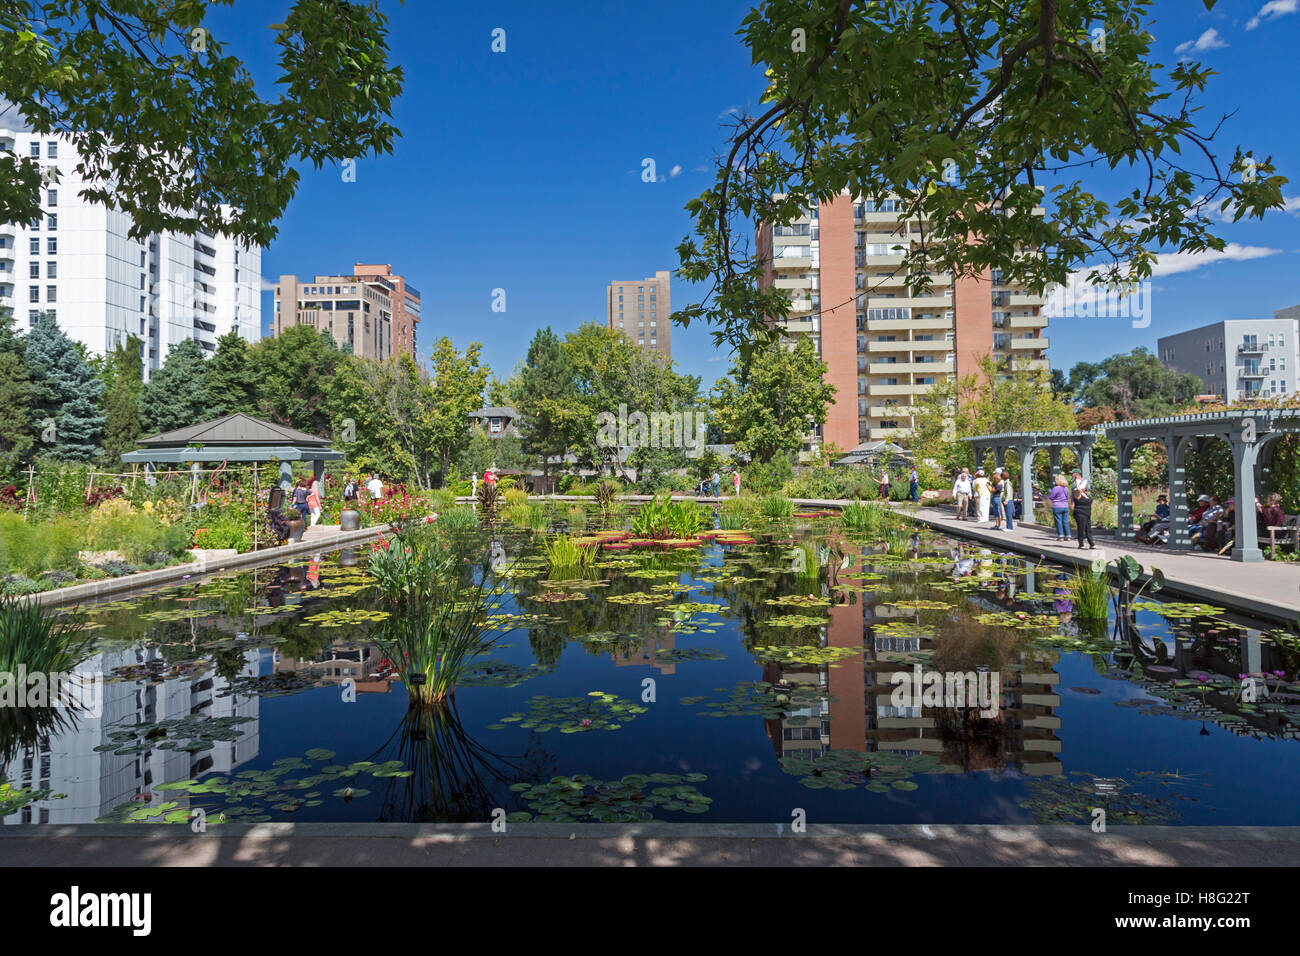 Denver, Colorado - The Monet Pool in Denver Botanic Gardens. Stock Photo